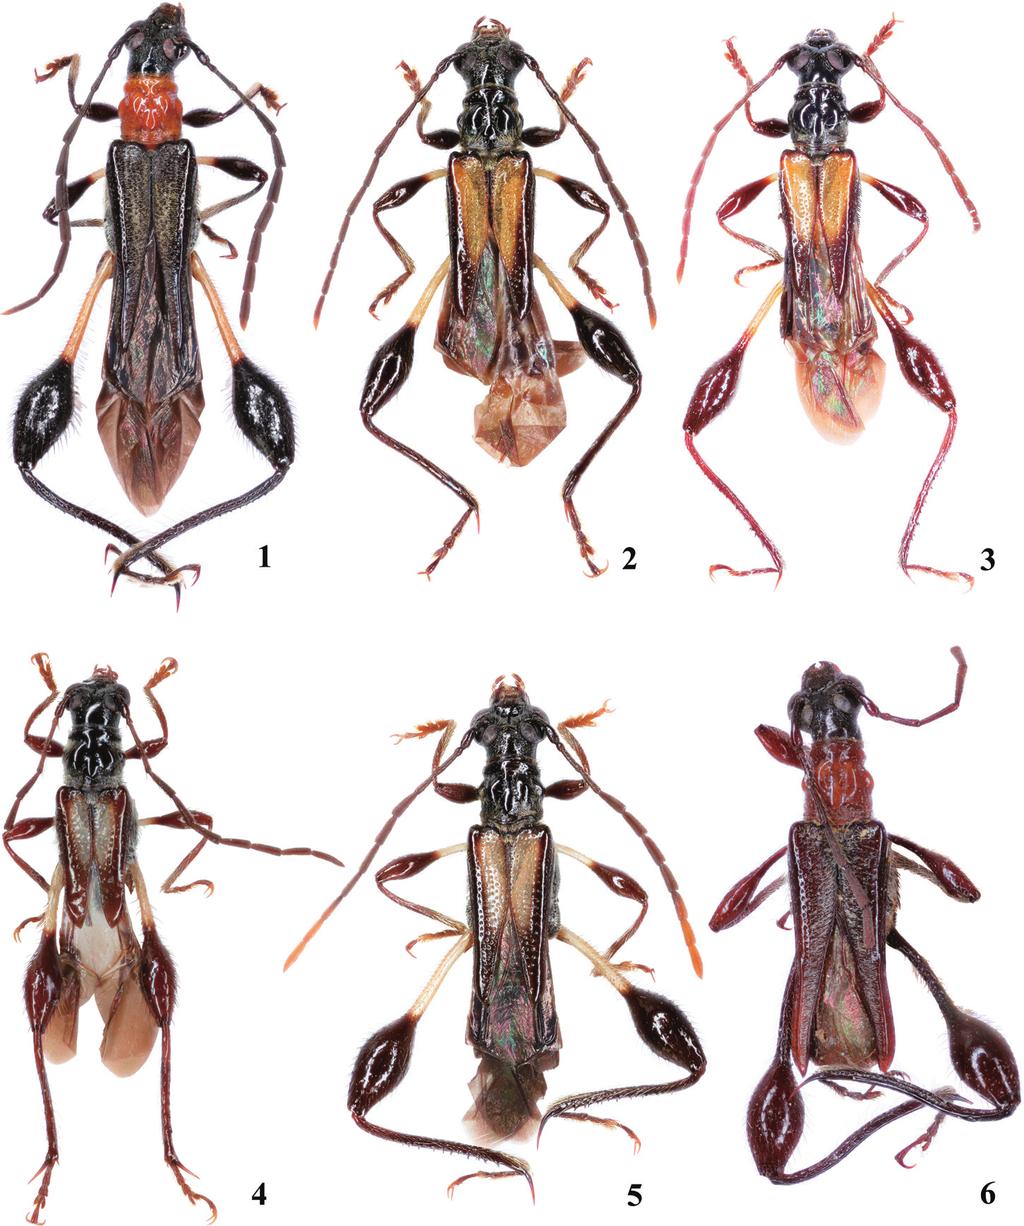 Six New Merionoeda from Borneo 167 Figs. 1 6. Merionoeda spp. from Borneo. 1, M. karinae sp. nov., holotype ; 2, M. glabra sp. nov., holotype ; 3, M. johkii sp. nov., holotype ; 4, M. makiharai sp.